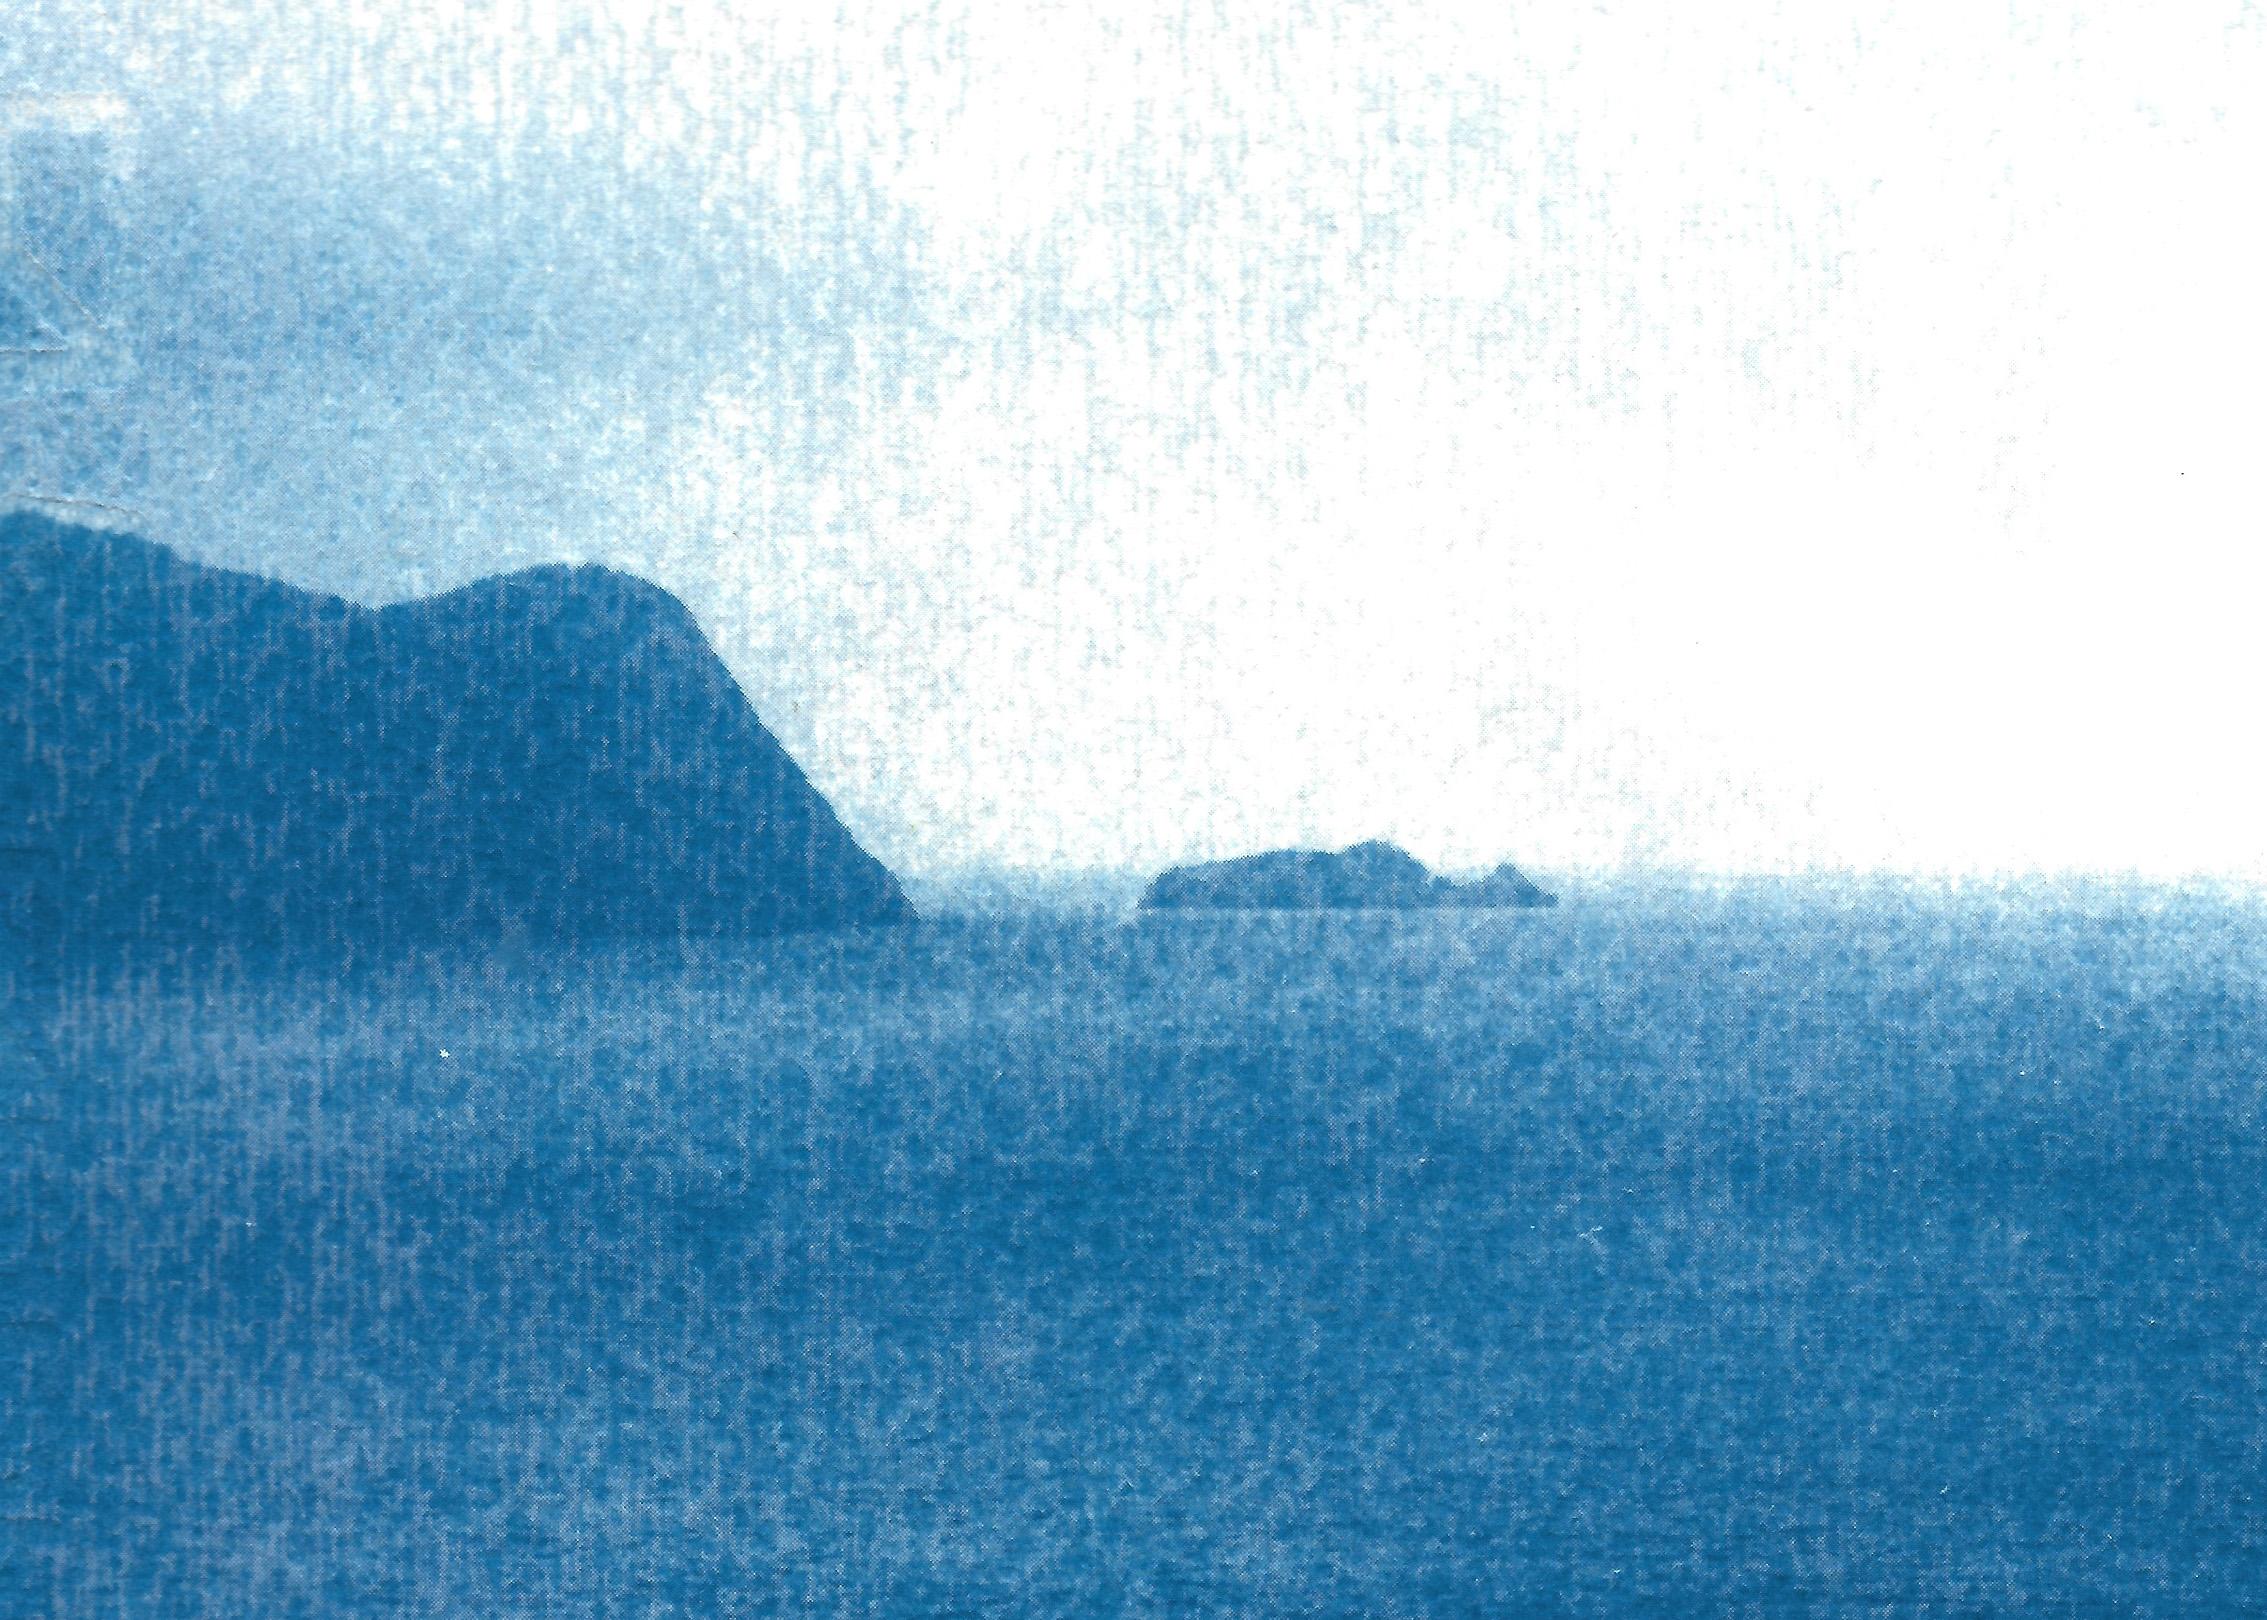 Sailboat Journey, Nautical Cyanotype Print on Watercolor Paper, Indigo Seascape - Blue Landscape Art by Kind of Cyan